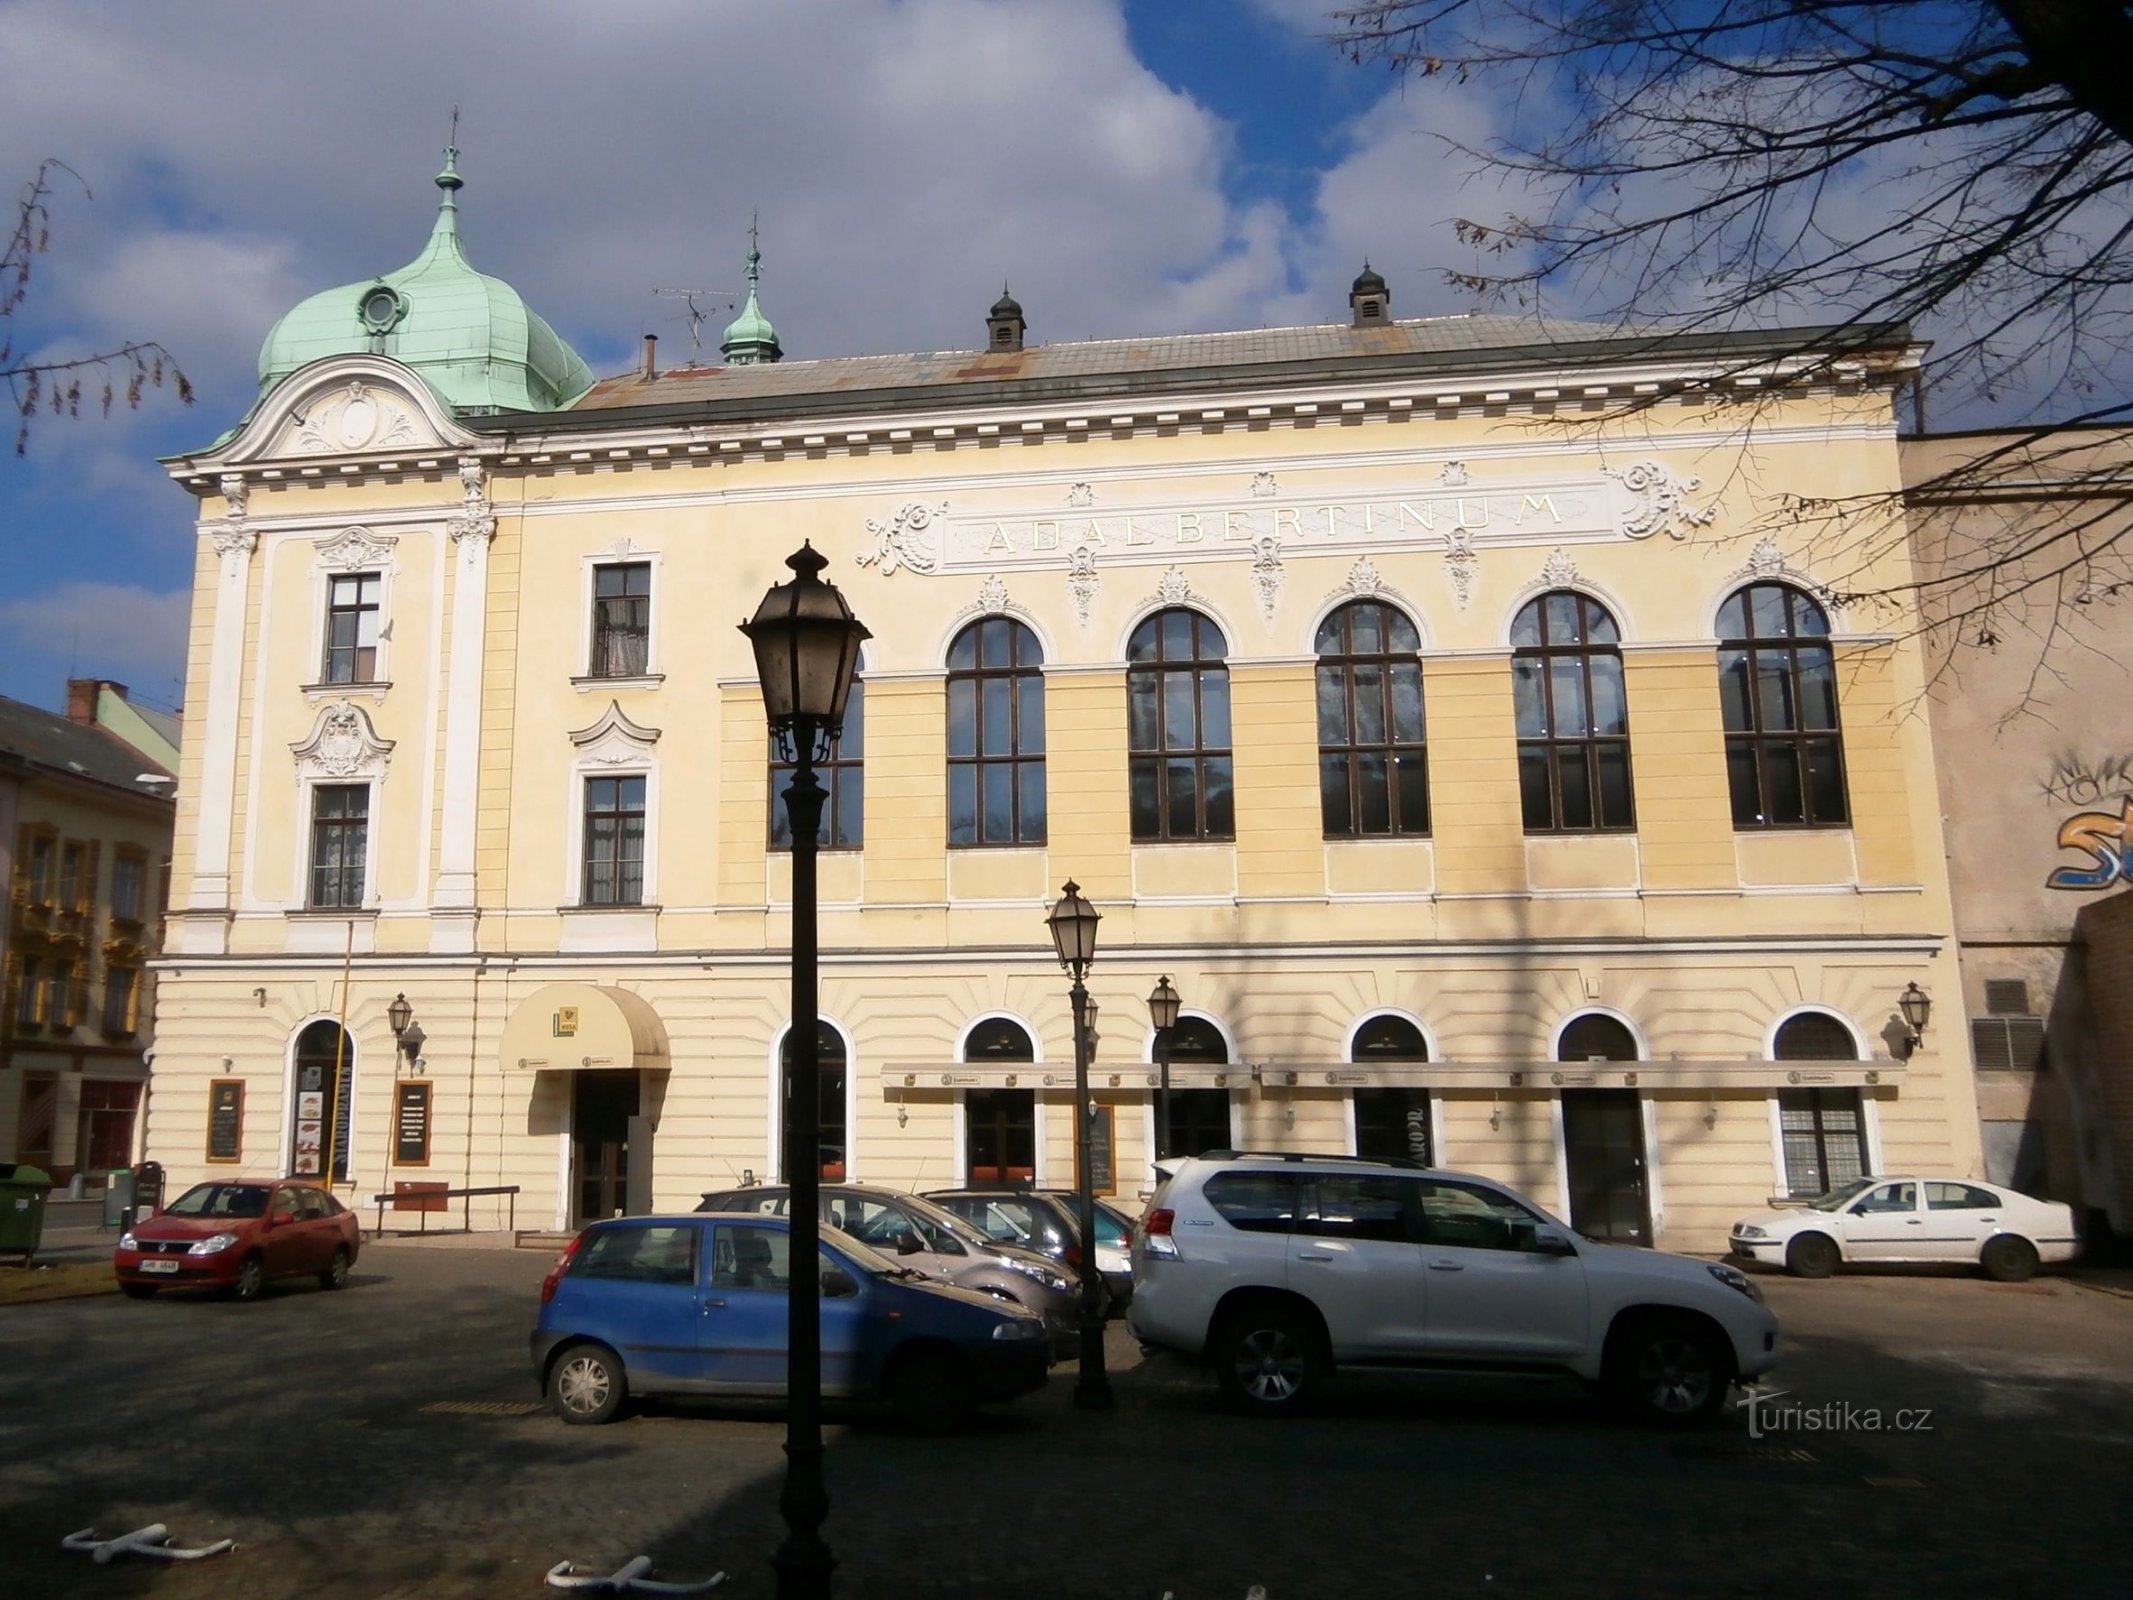 Adalbertinum (Hradec Králové, 1.3.2014 de abril de XNUMX)